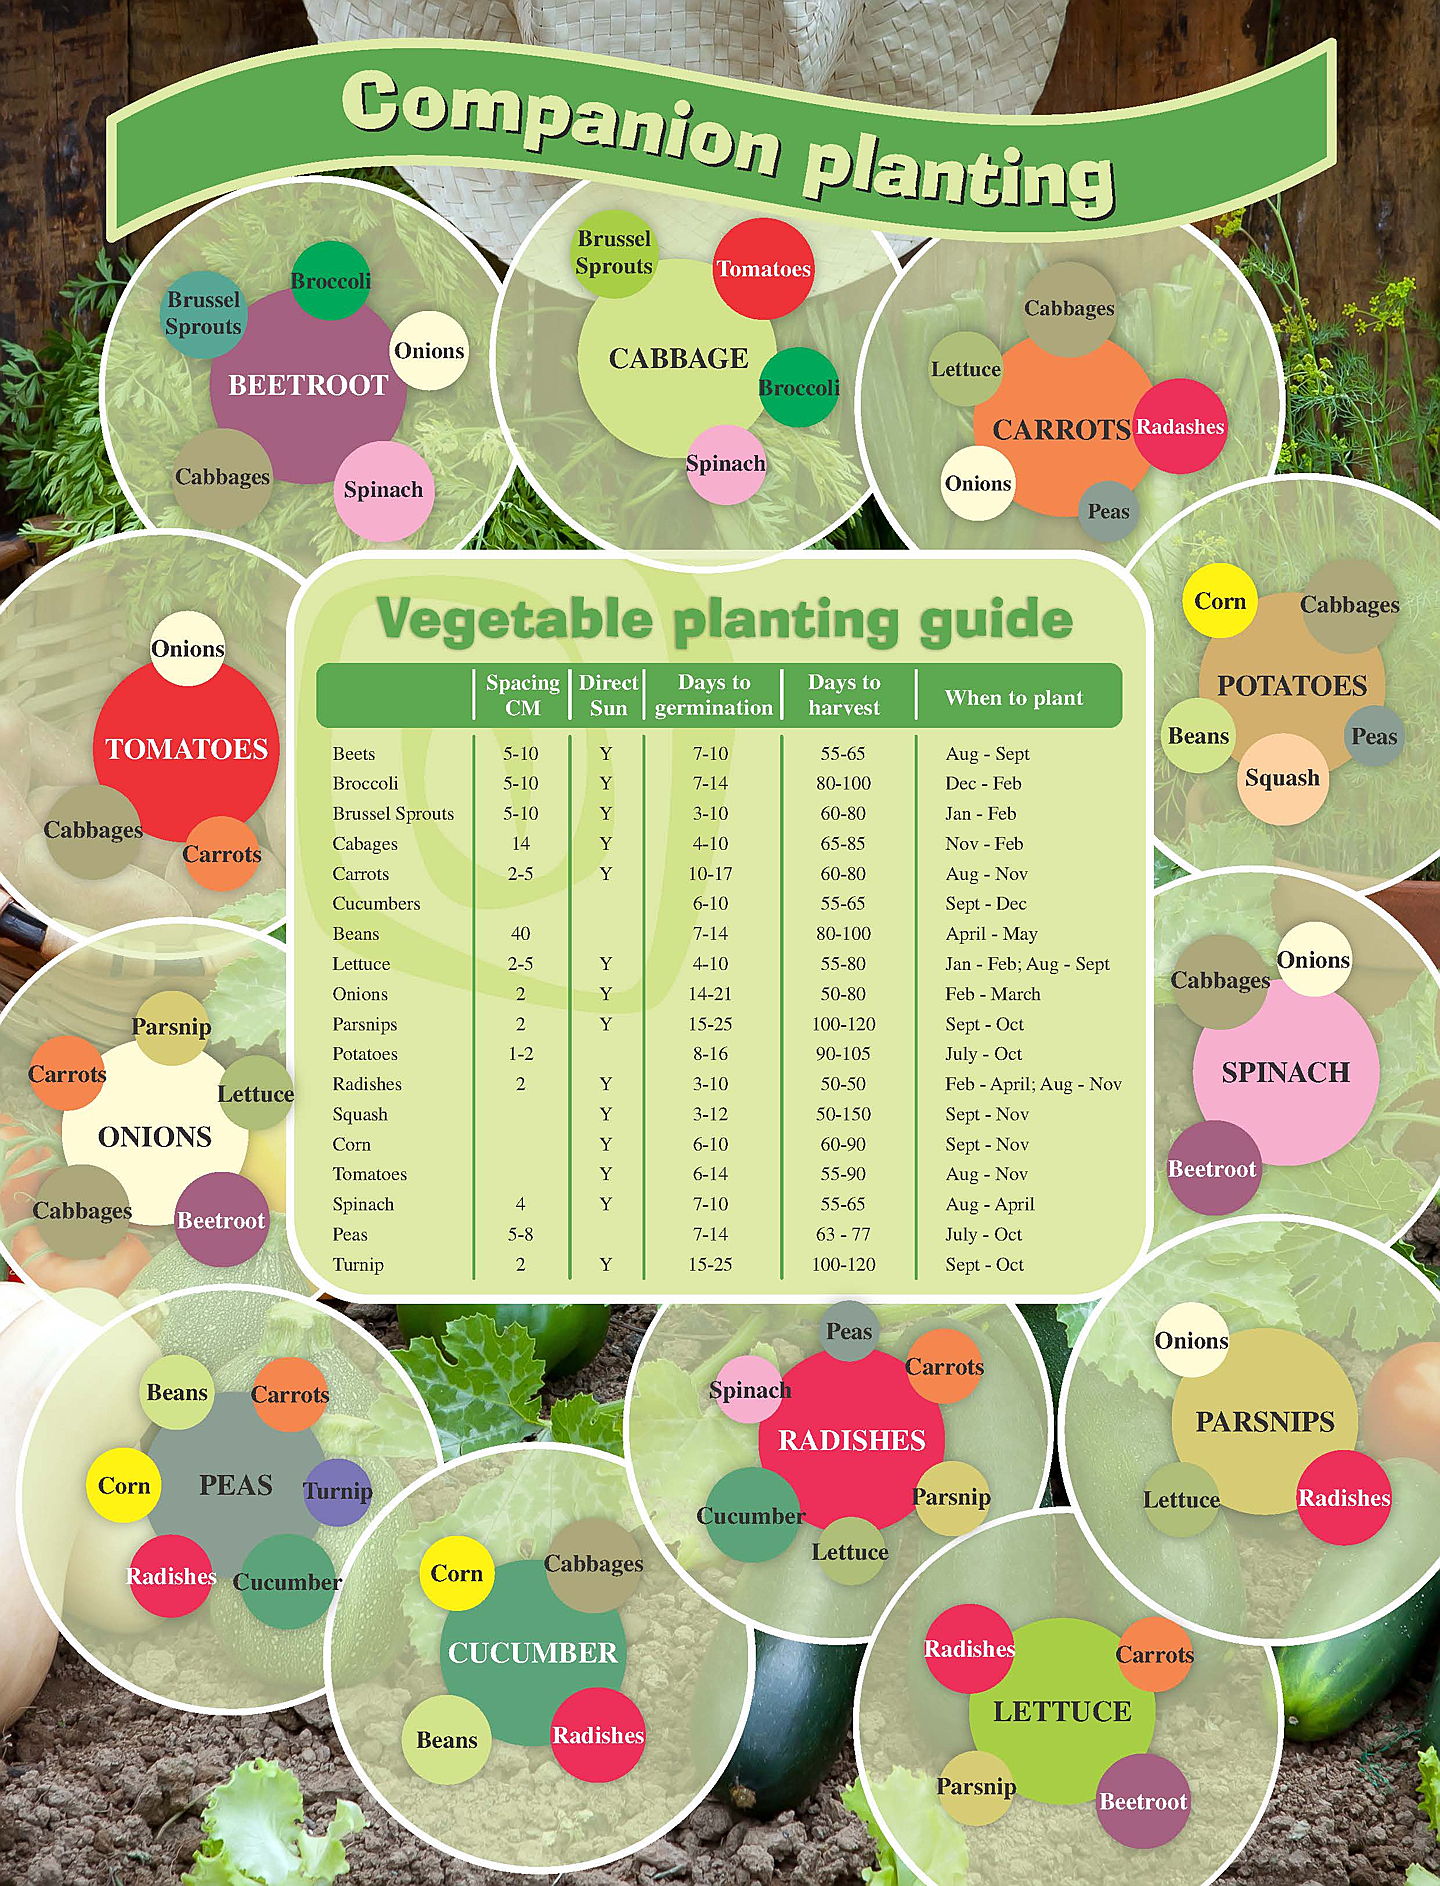  Hoedspruit
- Planting Guide.jpg